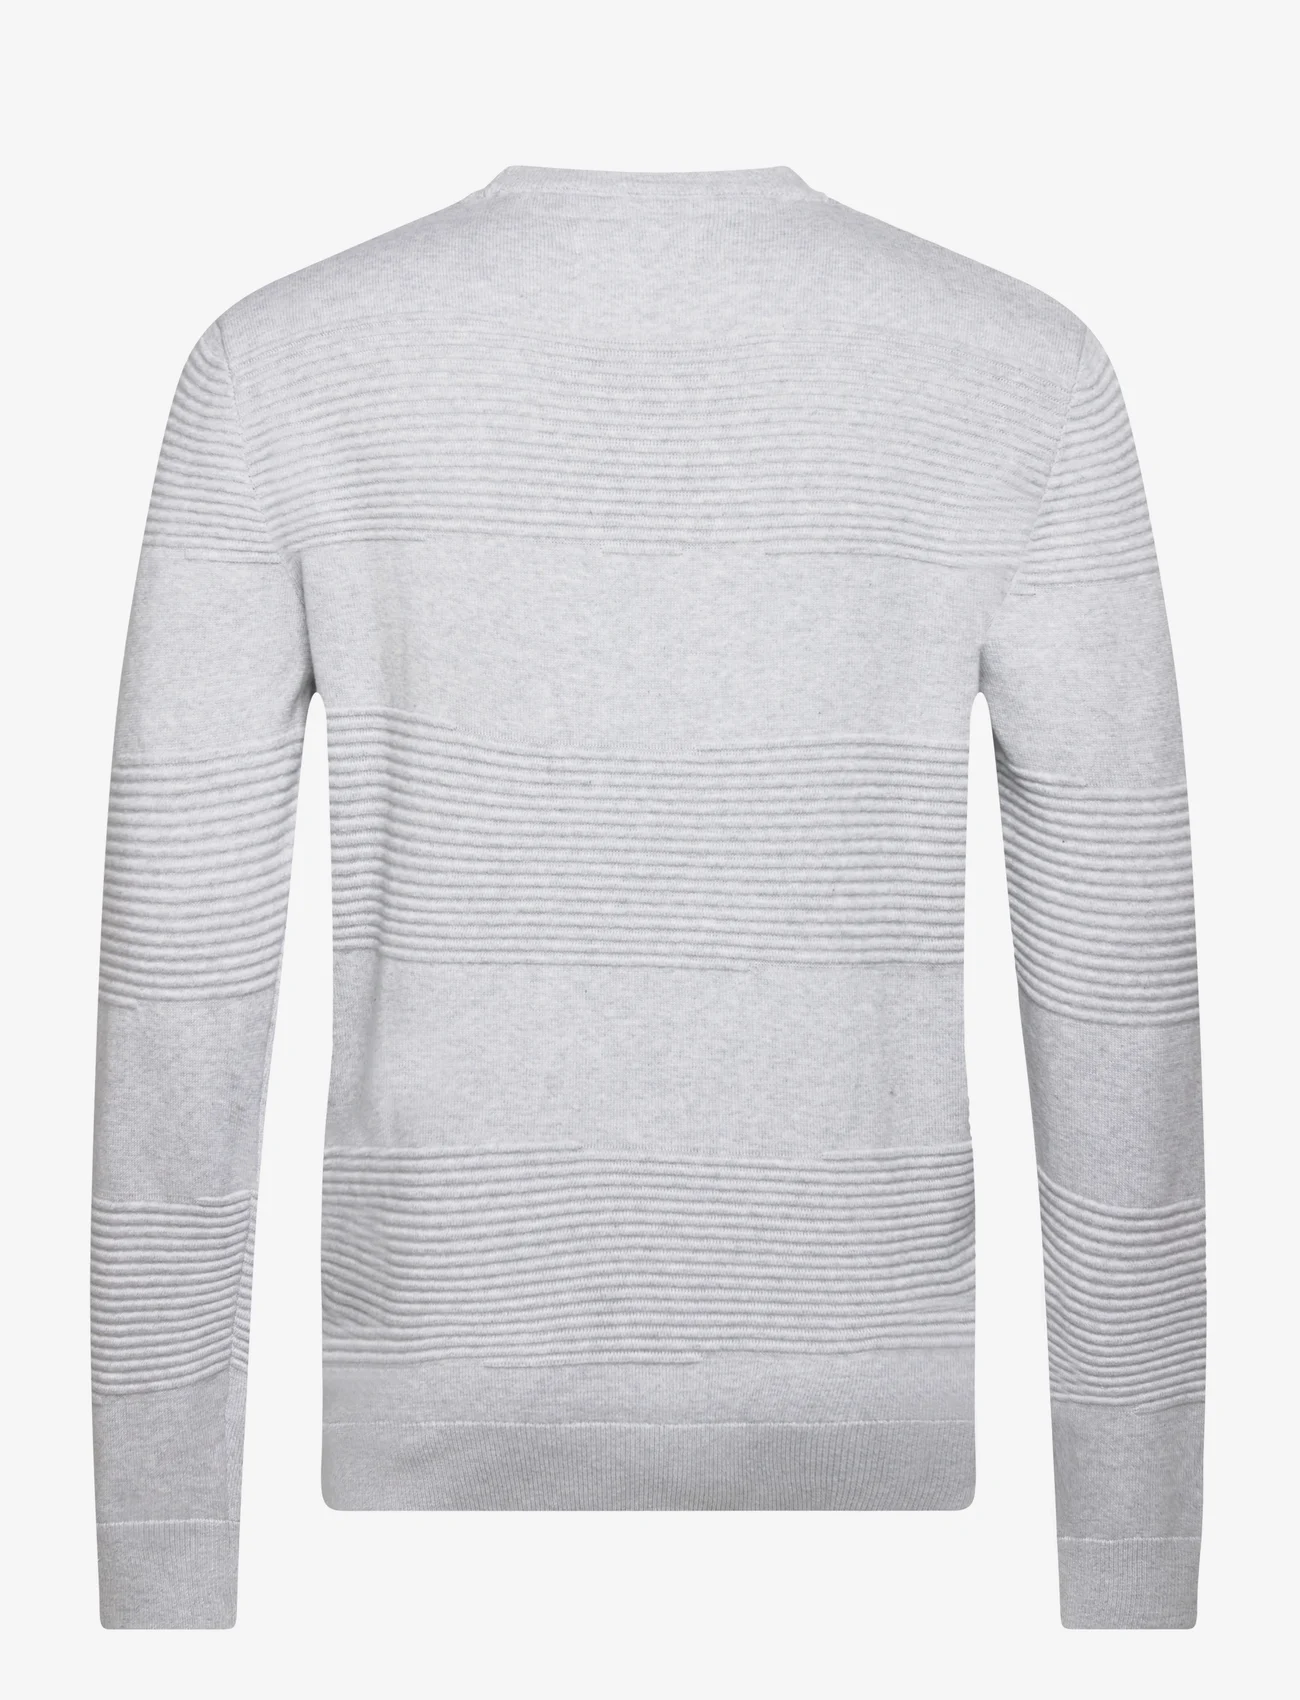 Tom Tailor - structure stripe crewneck knit - rundhals - light stone grey melange - 1